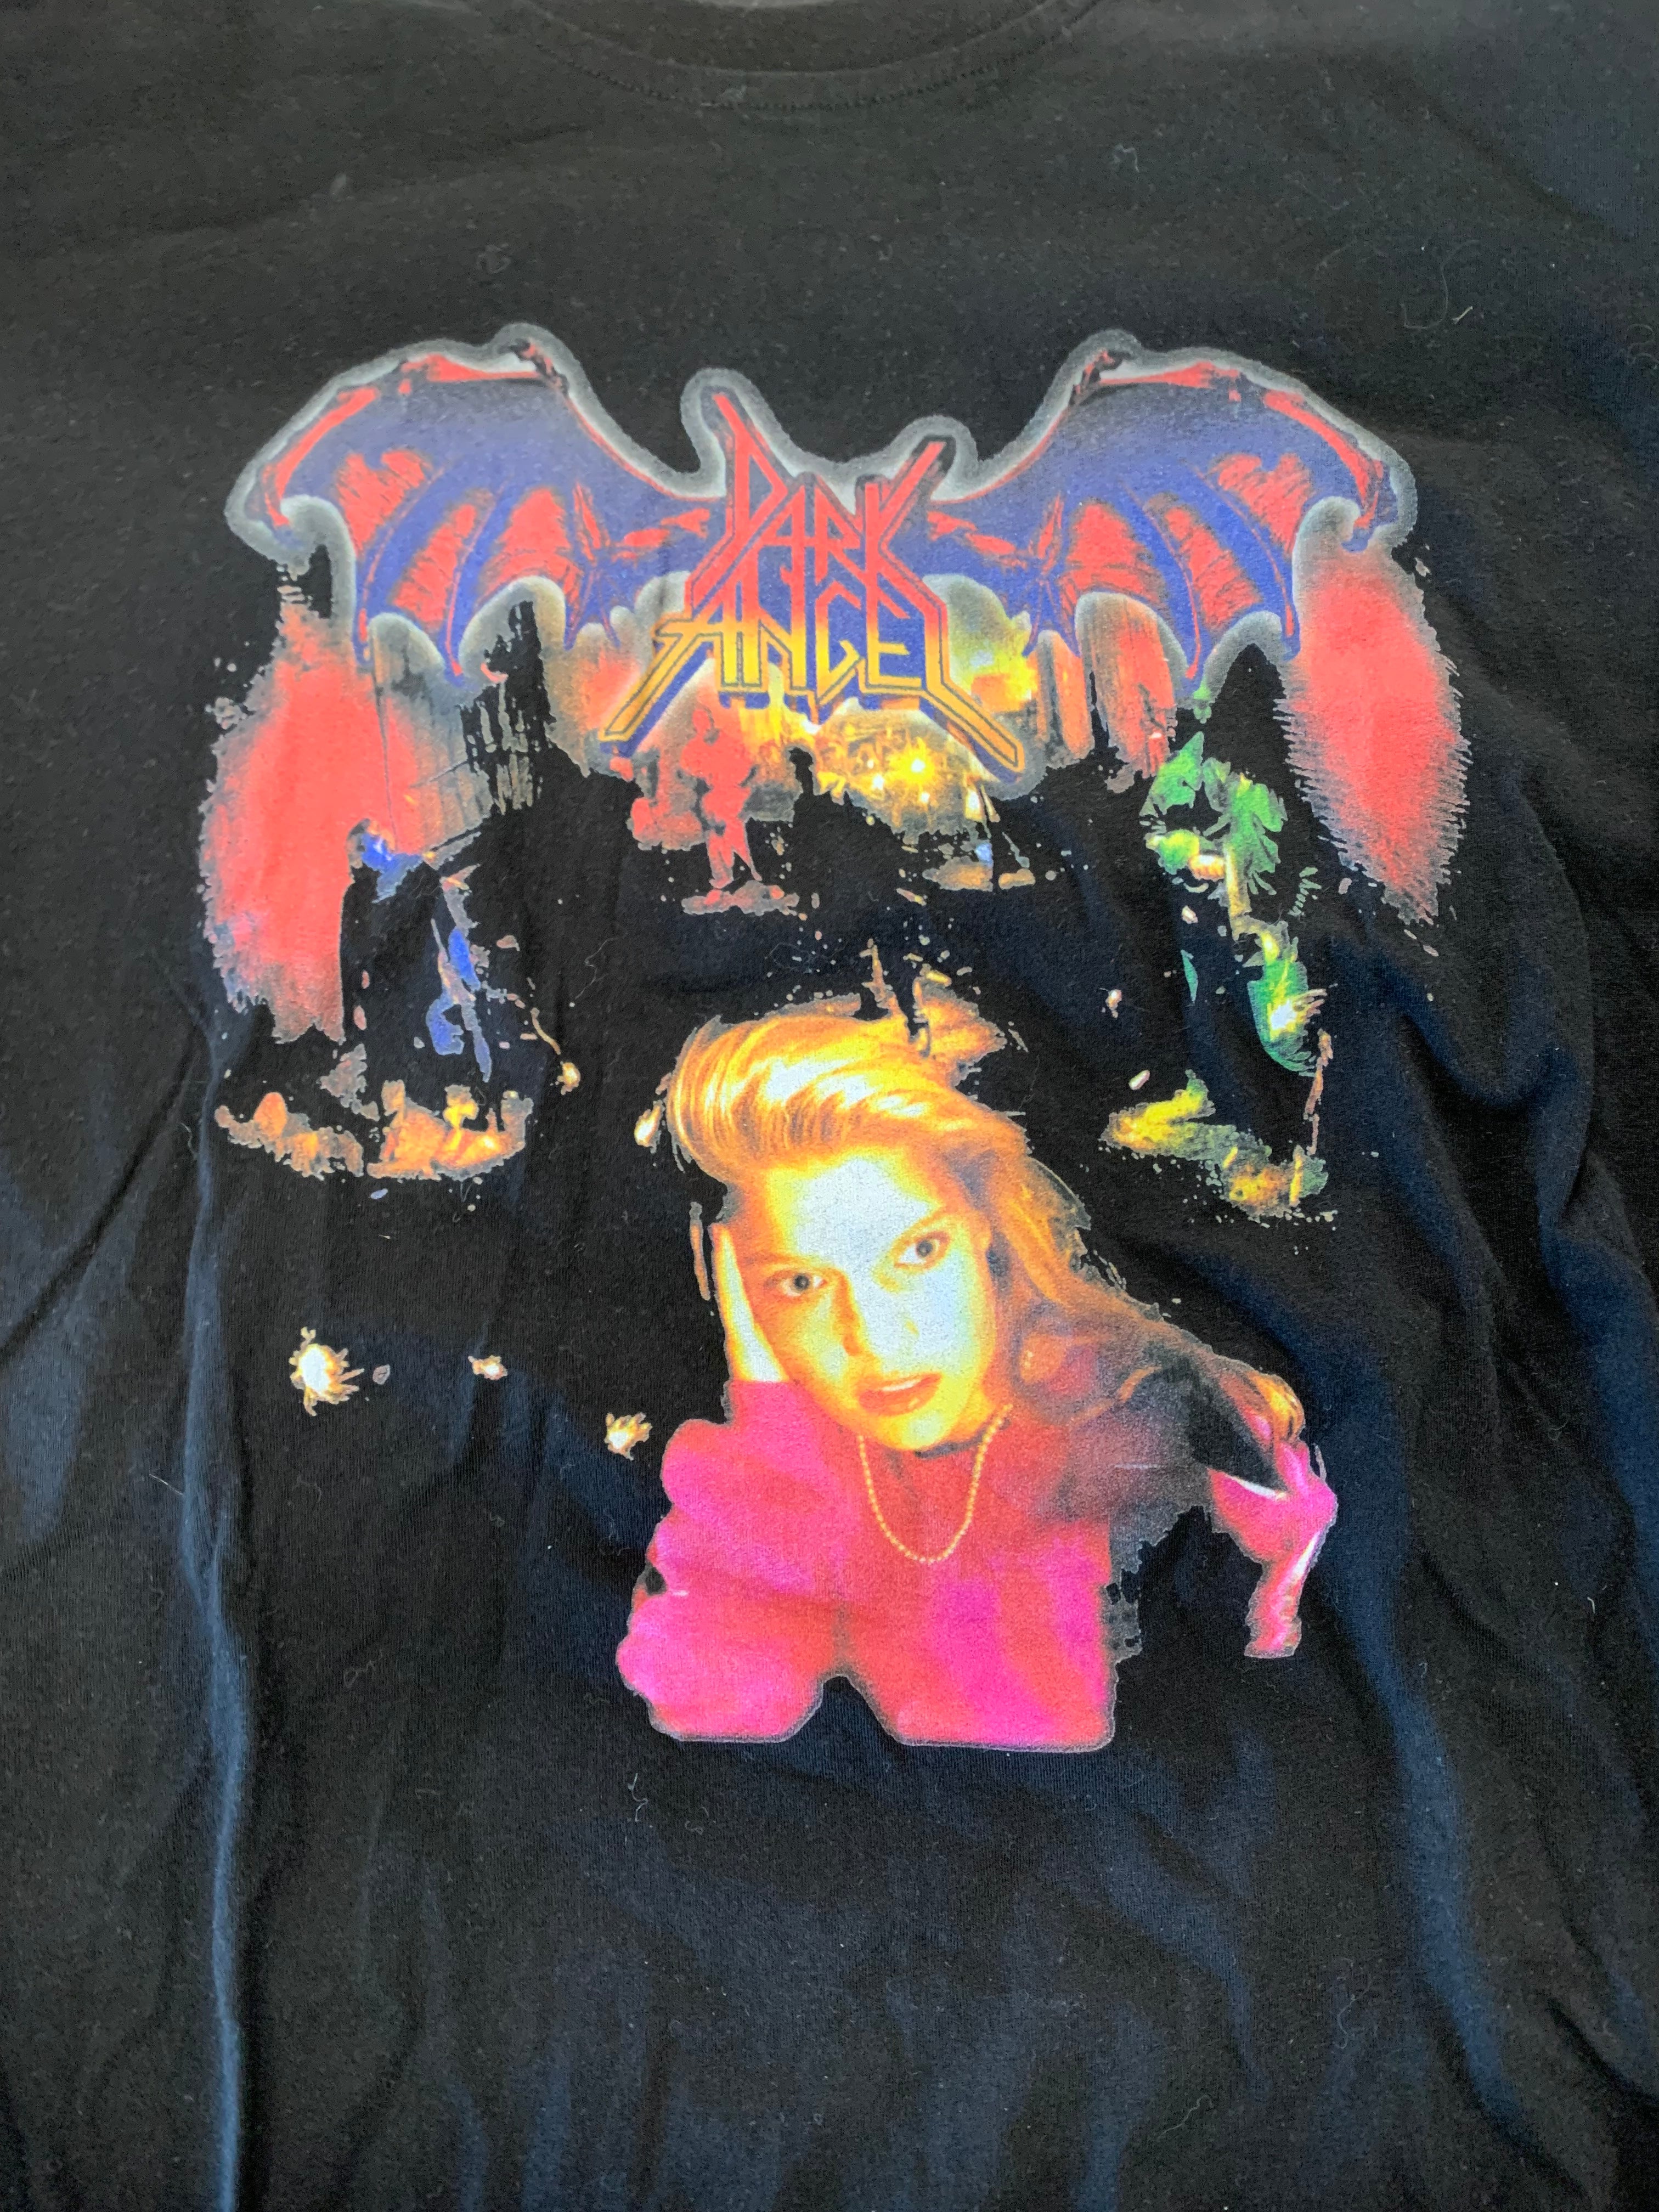 Dark Angel Time Does Not Heal Tour '91/'92 Reprint T-Shirt, Black, M